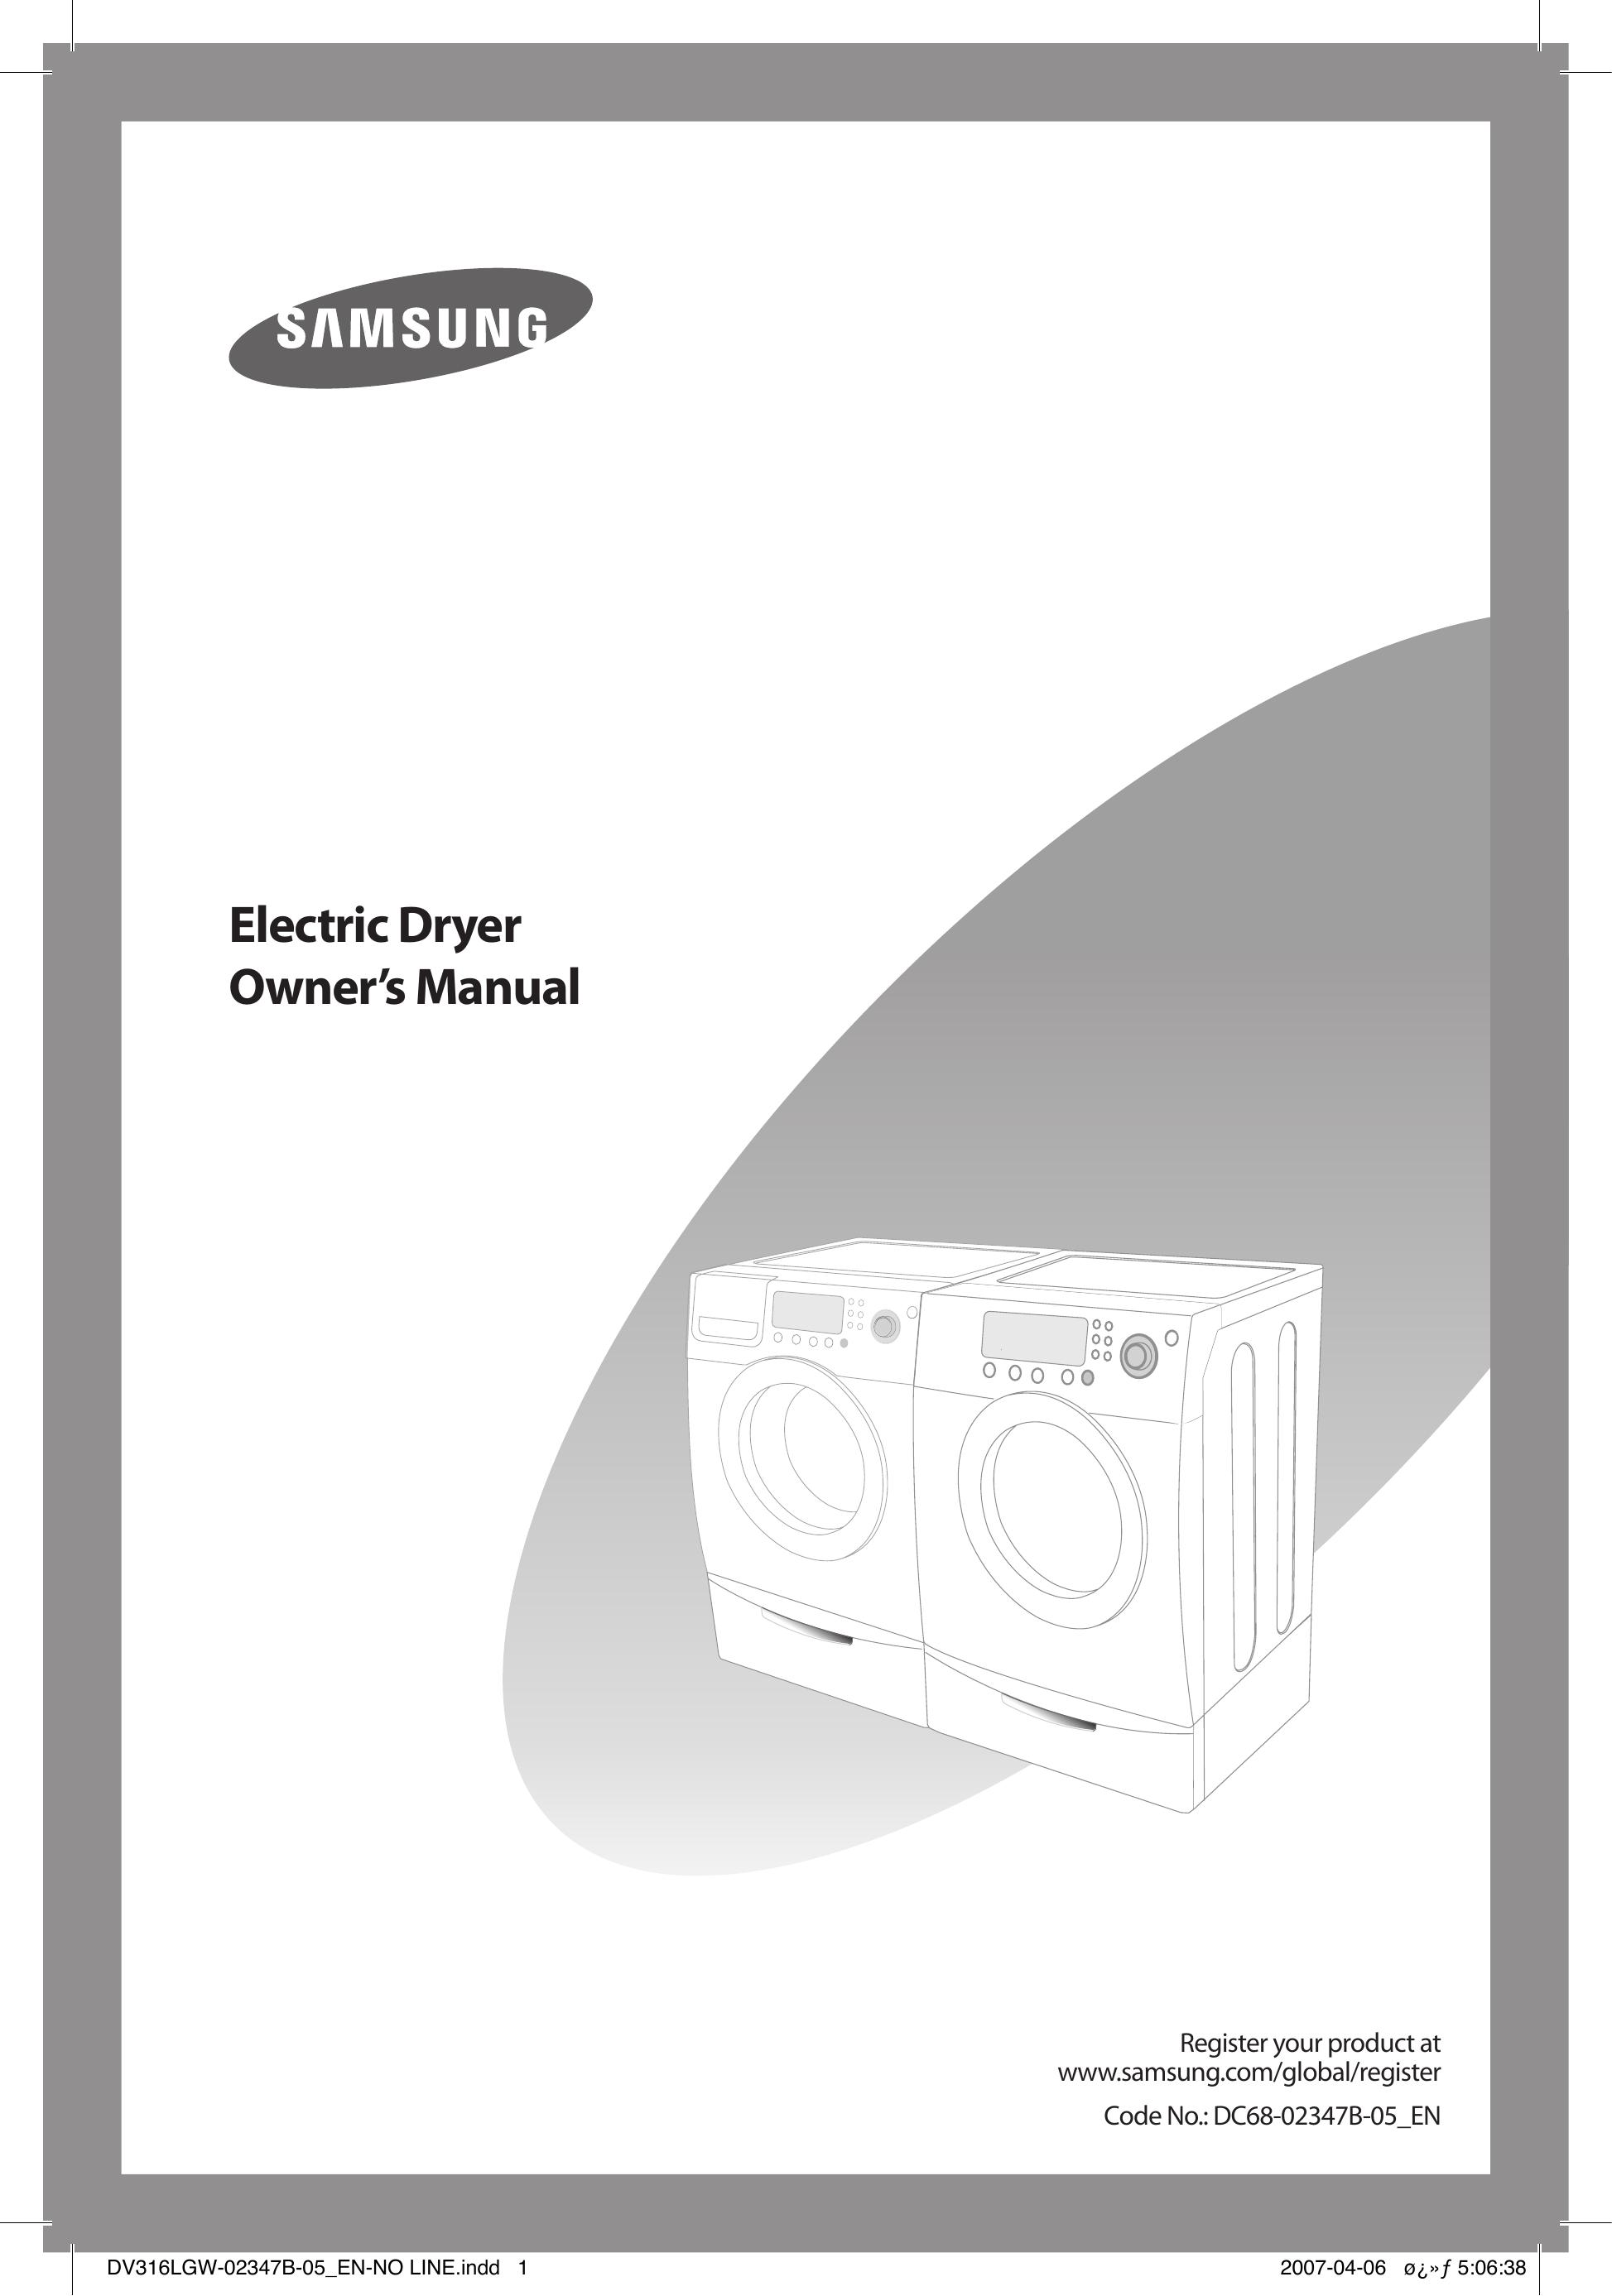 Samsung DC68-02347B-05 Clothes Dryer User Manual